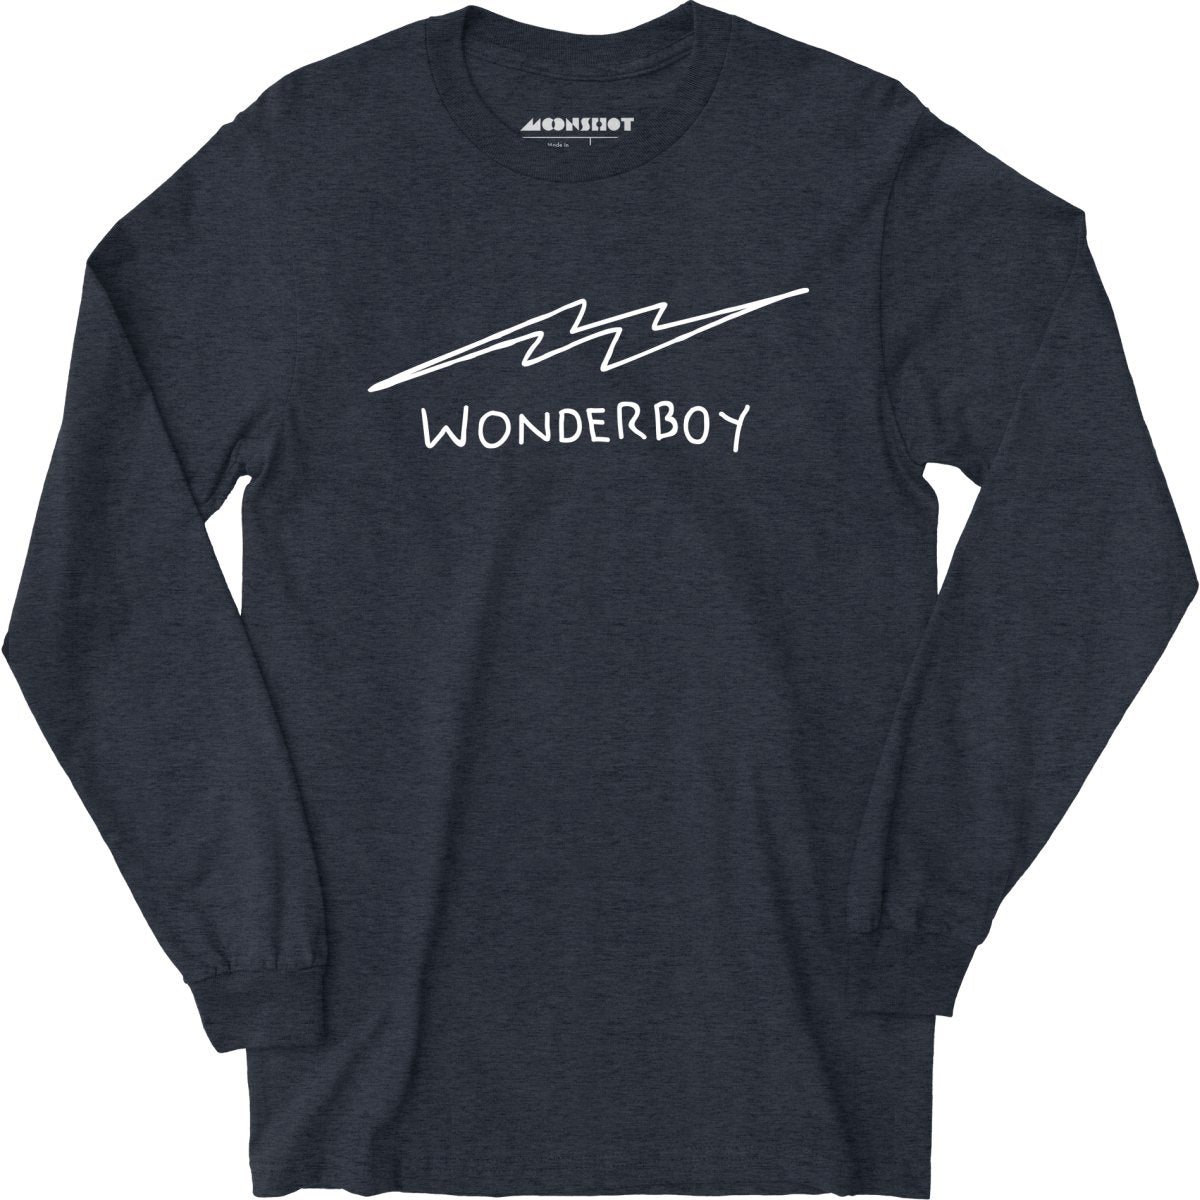 Roy Hobbs Wonderboy Bat - Long Sleeve T-Shirt